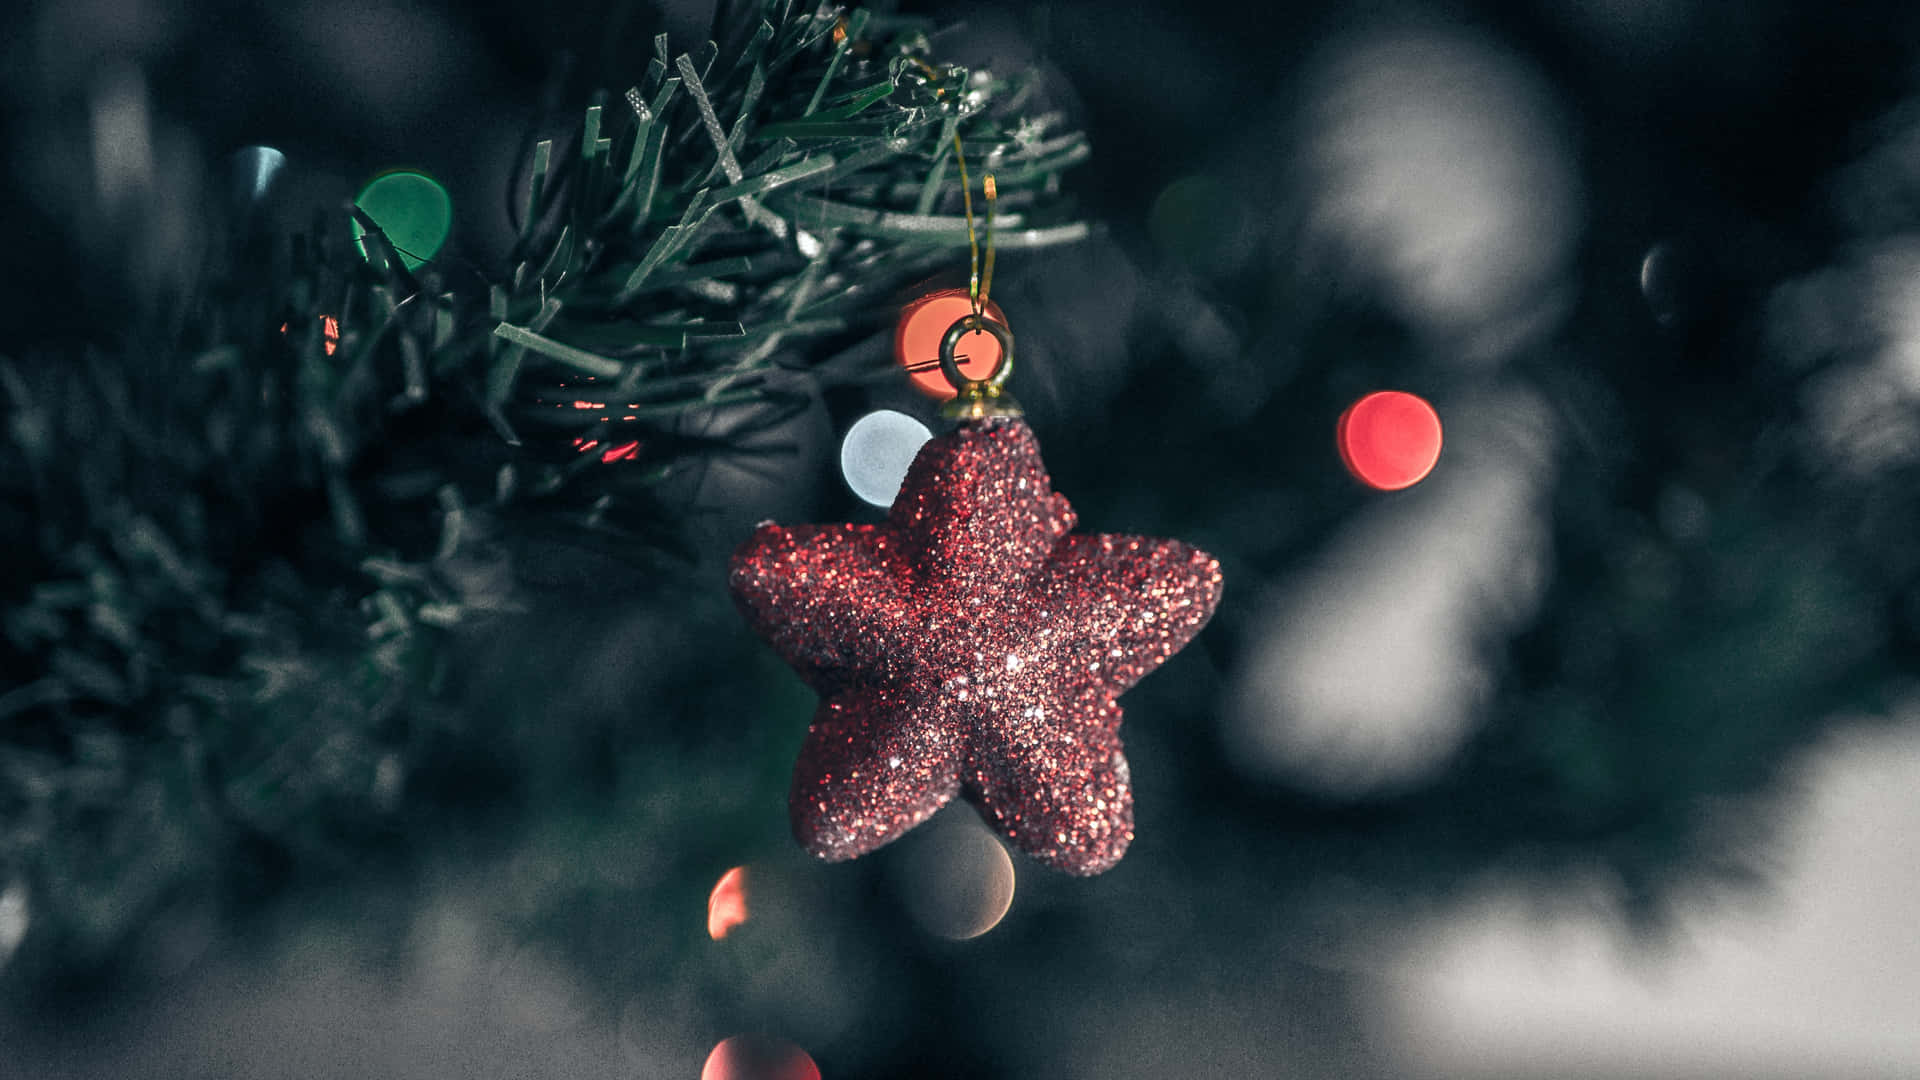 "A glimmering Christmas star illuminates the night sky." Wallpaper